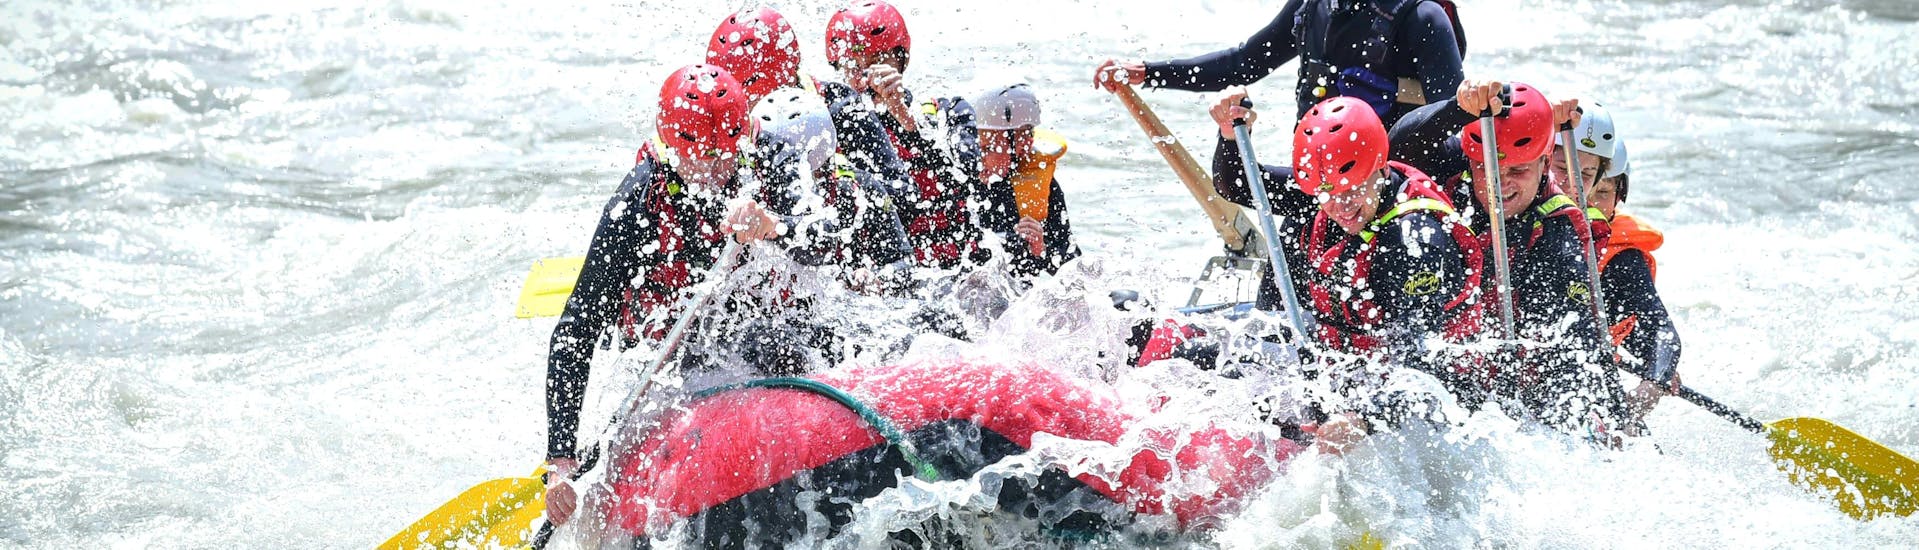 Rafting para expertos en Sautens - Ötztaler dolor.